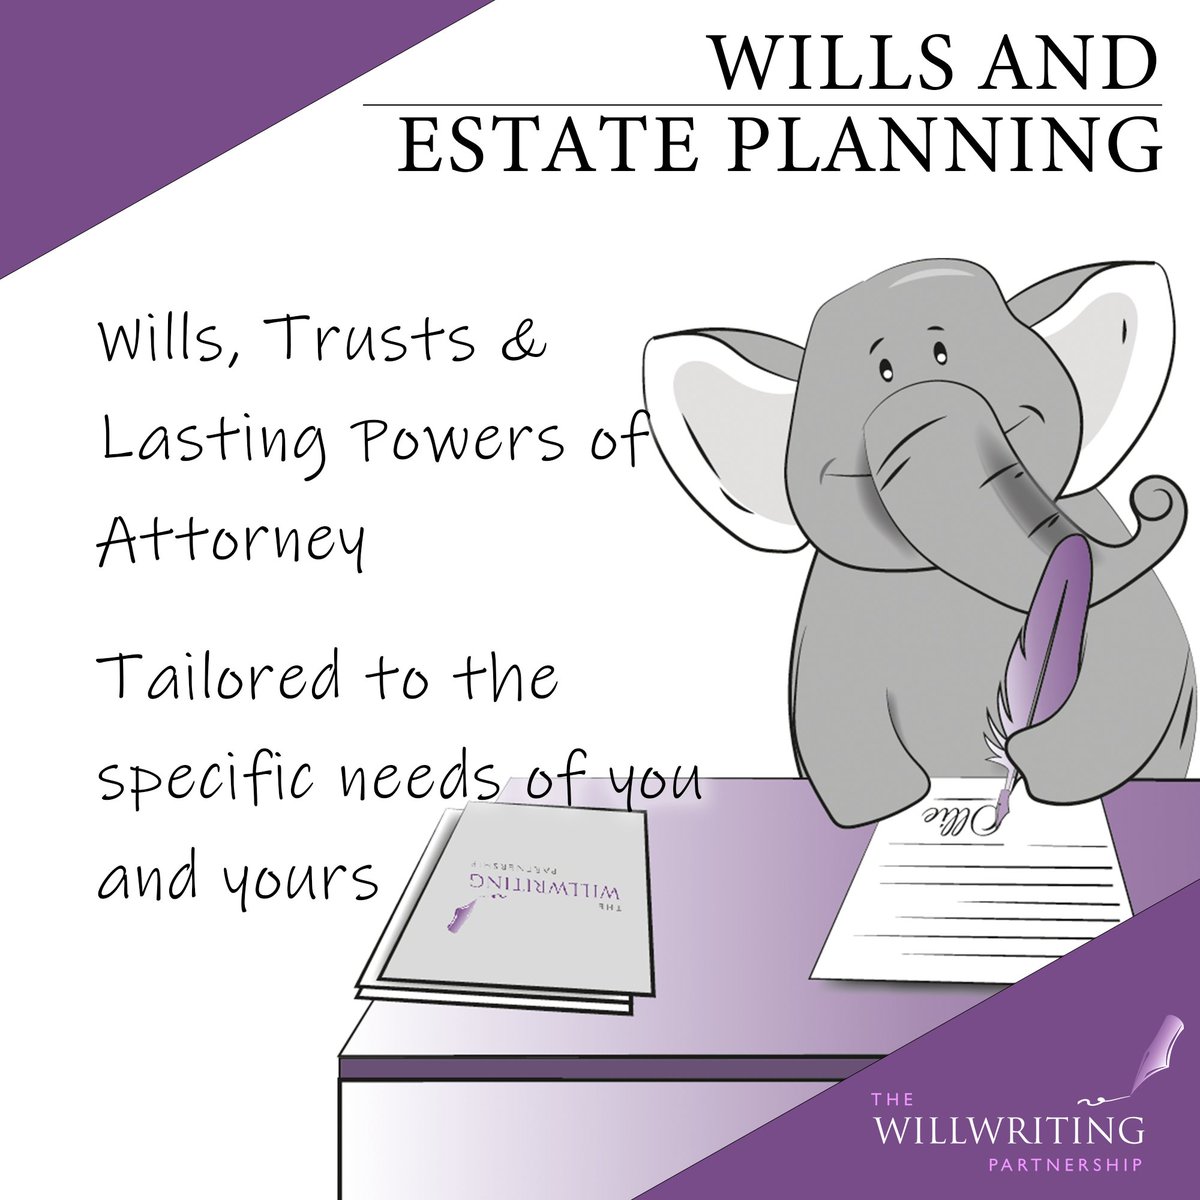 What do you need?

twp.co.uk

#TWP #WillWriting #EstatePlanning #Willwritingbutfriendlier